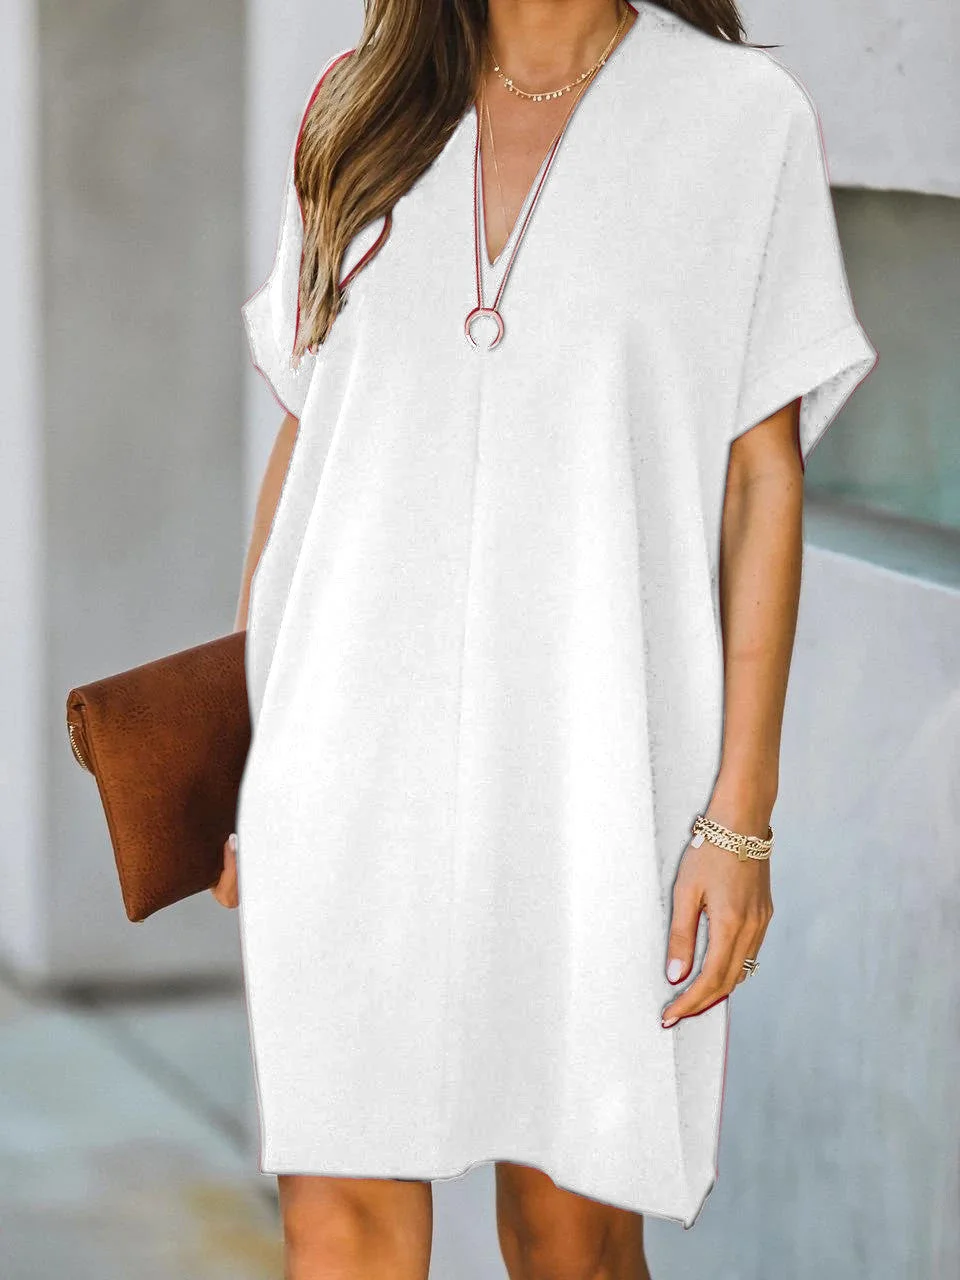 Women's Short Sleeve V-neck Solid Color Casual Dress